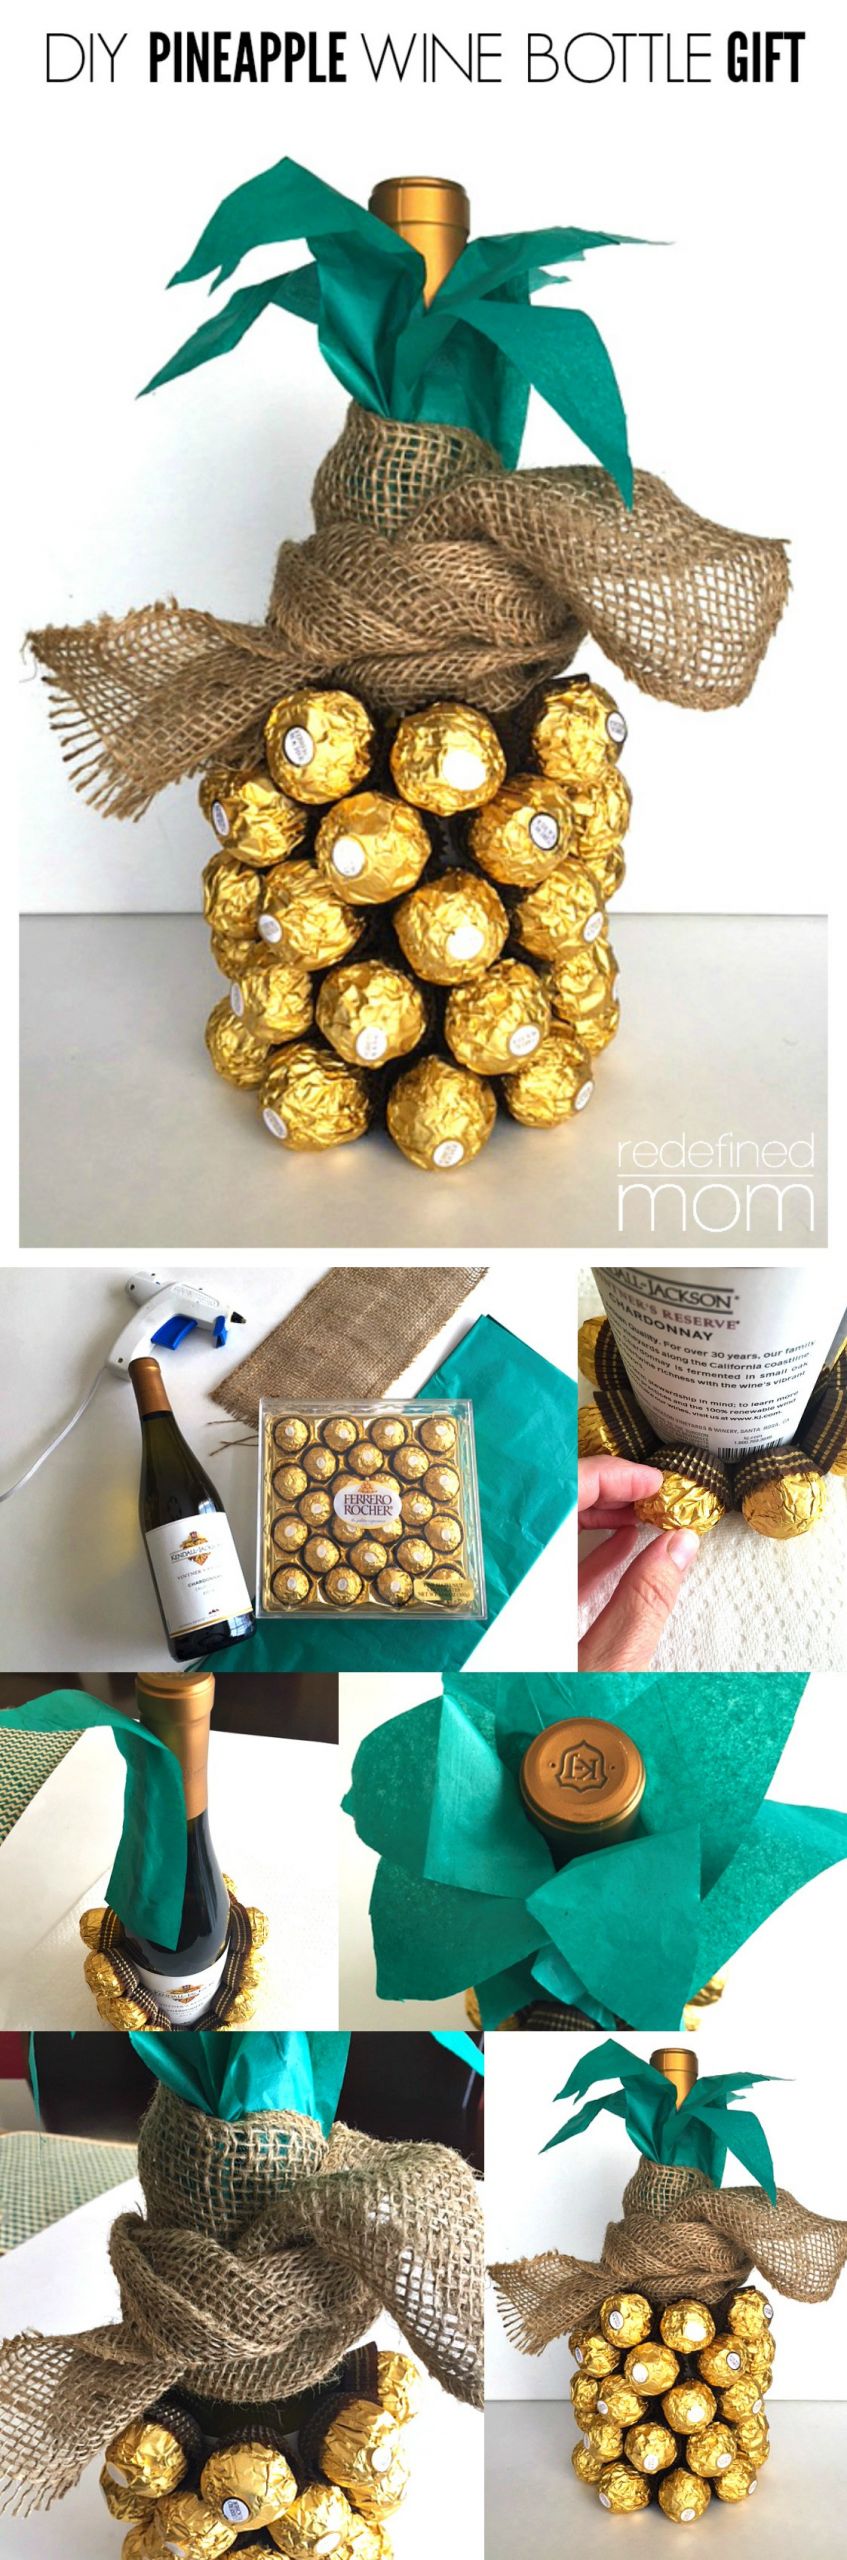 Gifts Ideas DIY
 DIY Pineapple Wine Bottle Gift Tutorial